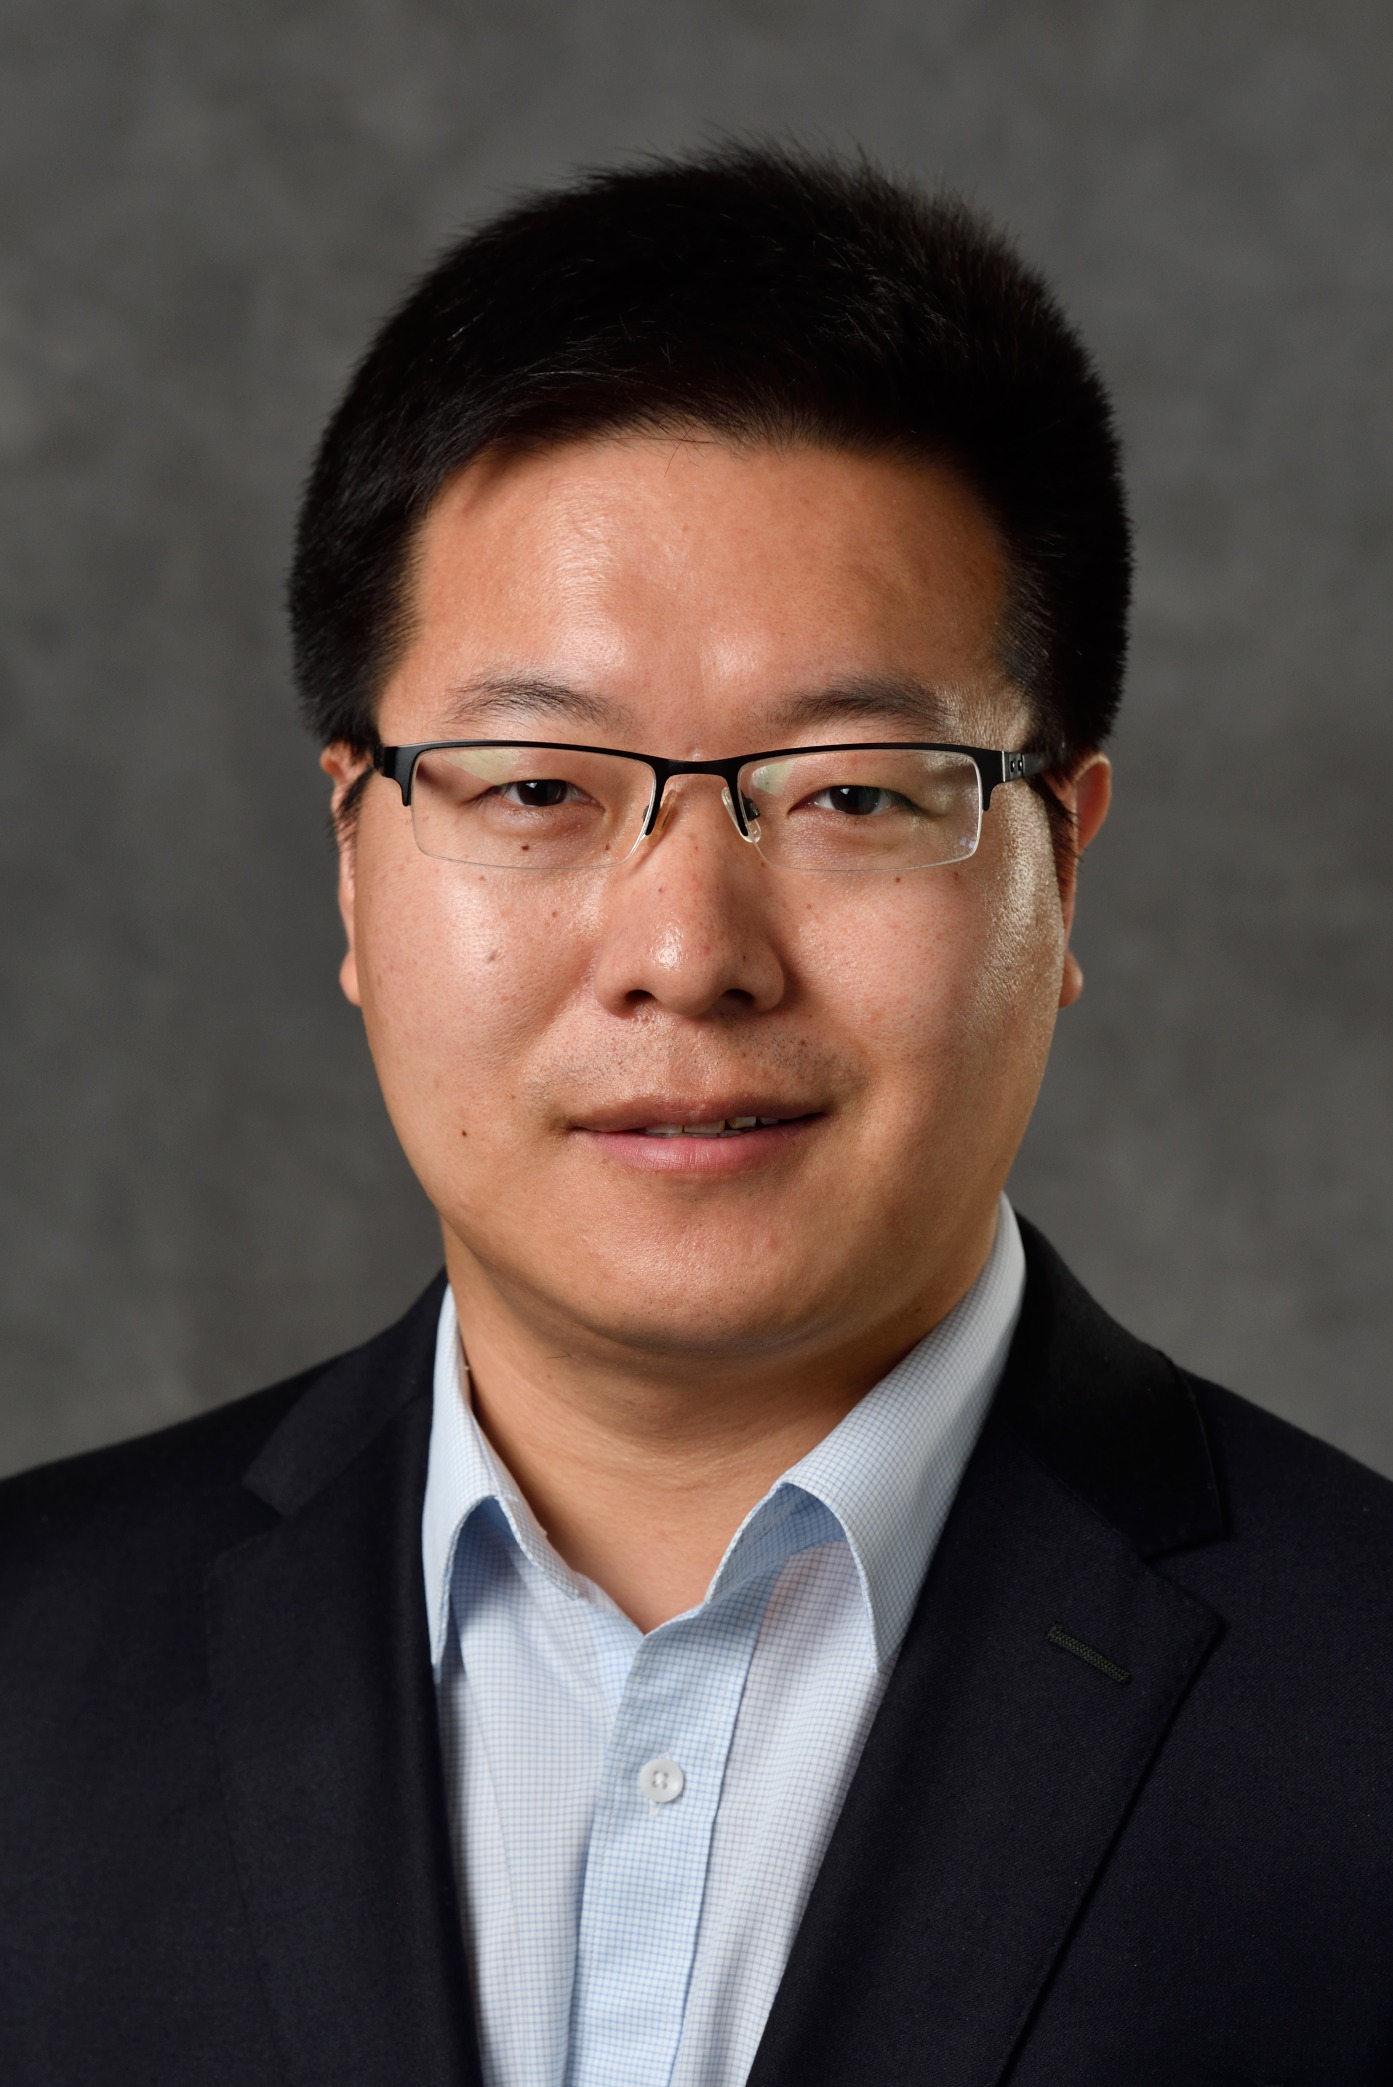 MSU Assistant Professor Changyong Cao